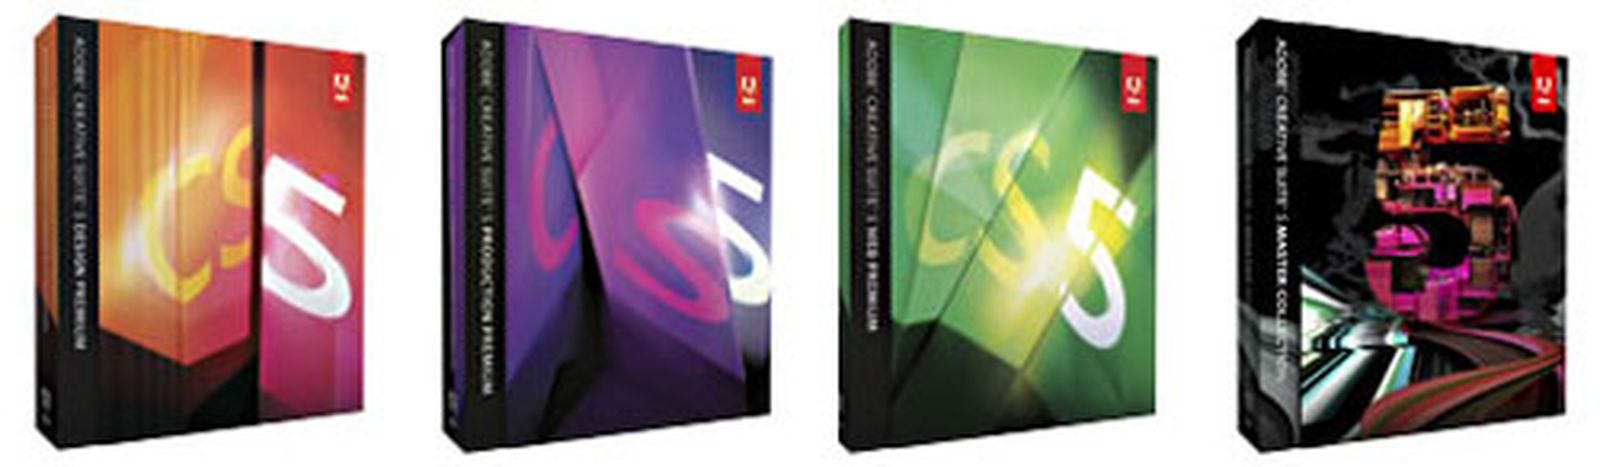 Adobe Introduces Creative Suite 5.5, Subscription Editions - MacRumors